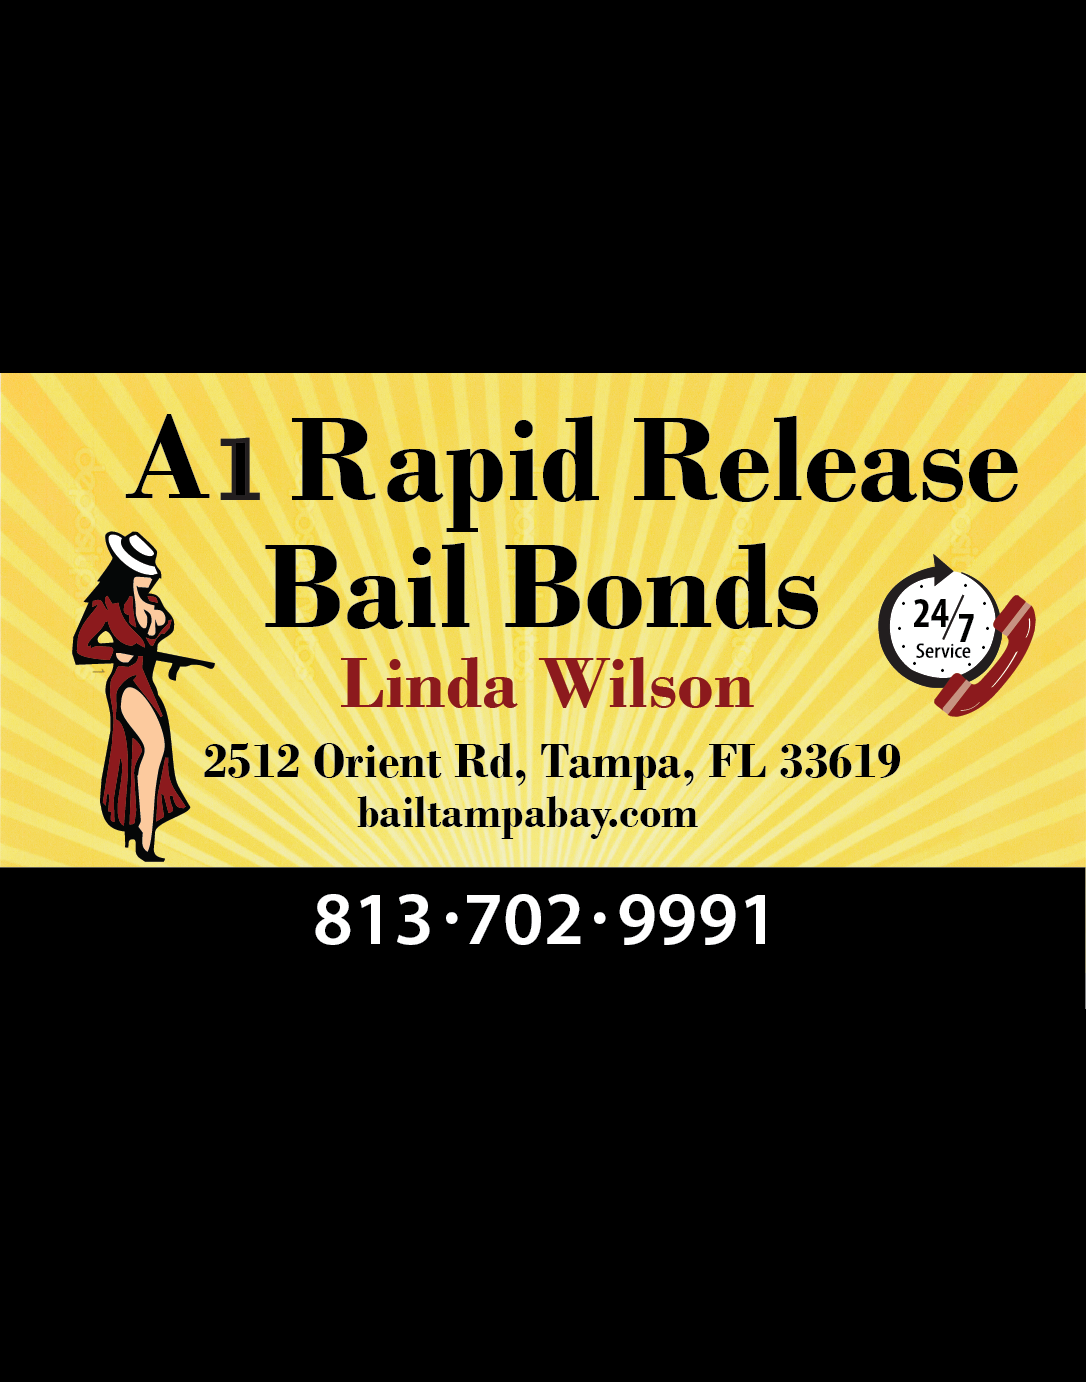 A1 Rapid Release Bail Bonds Poster Image